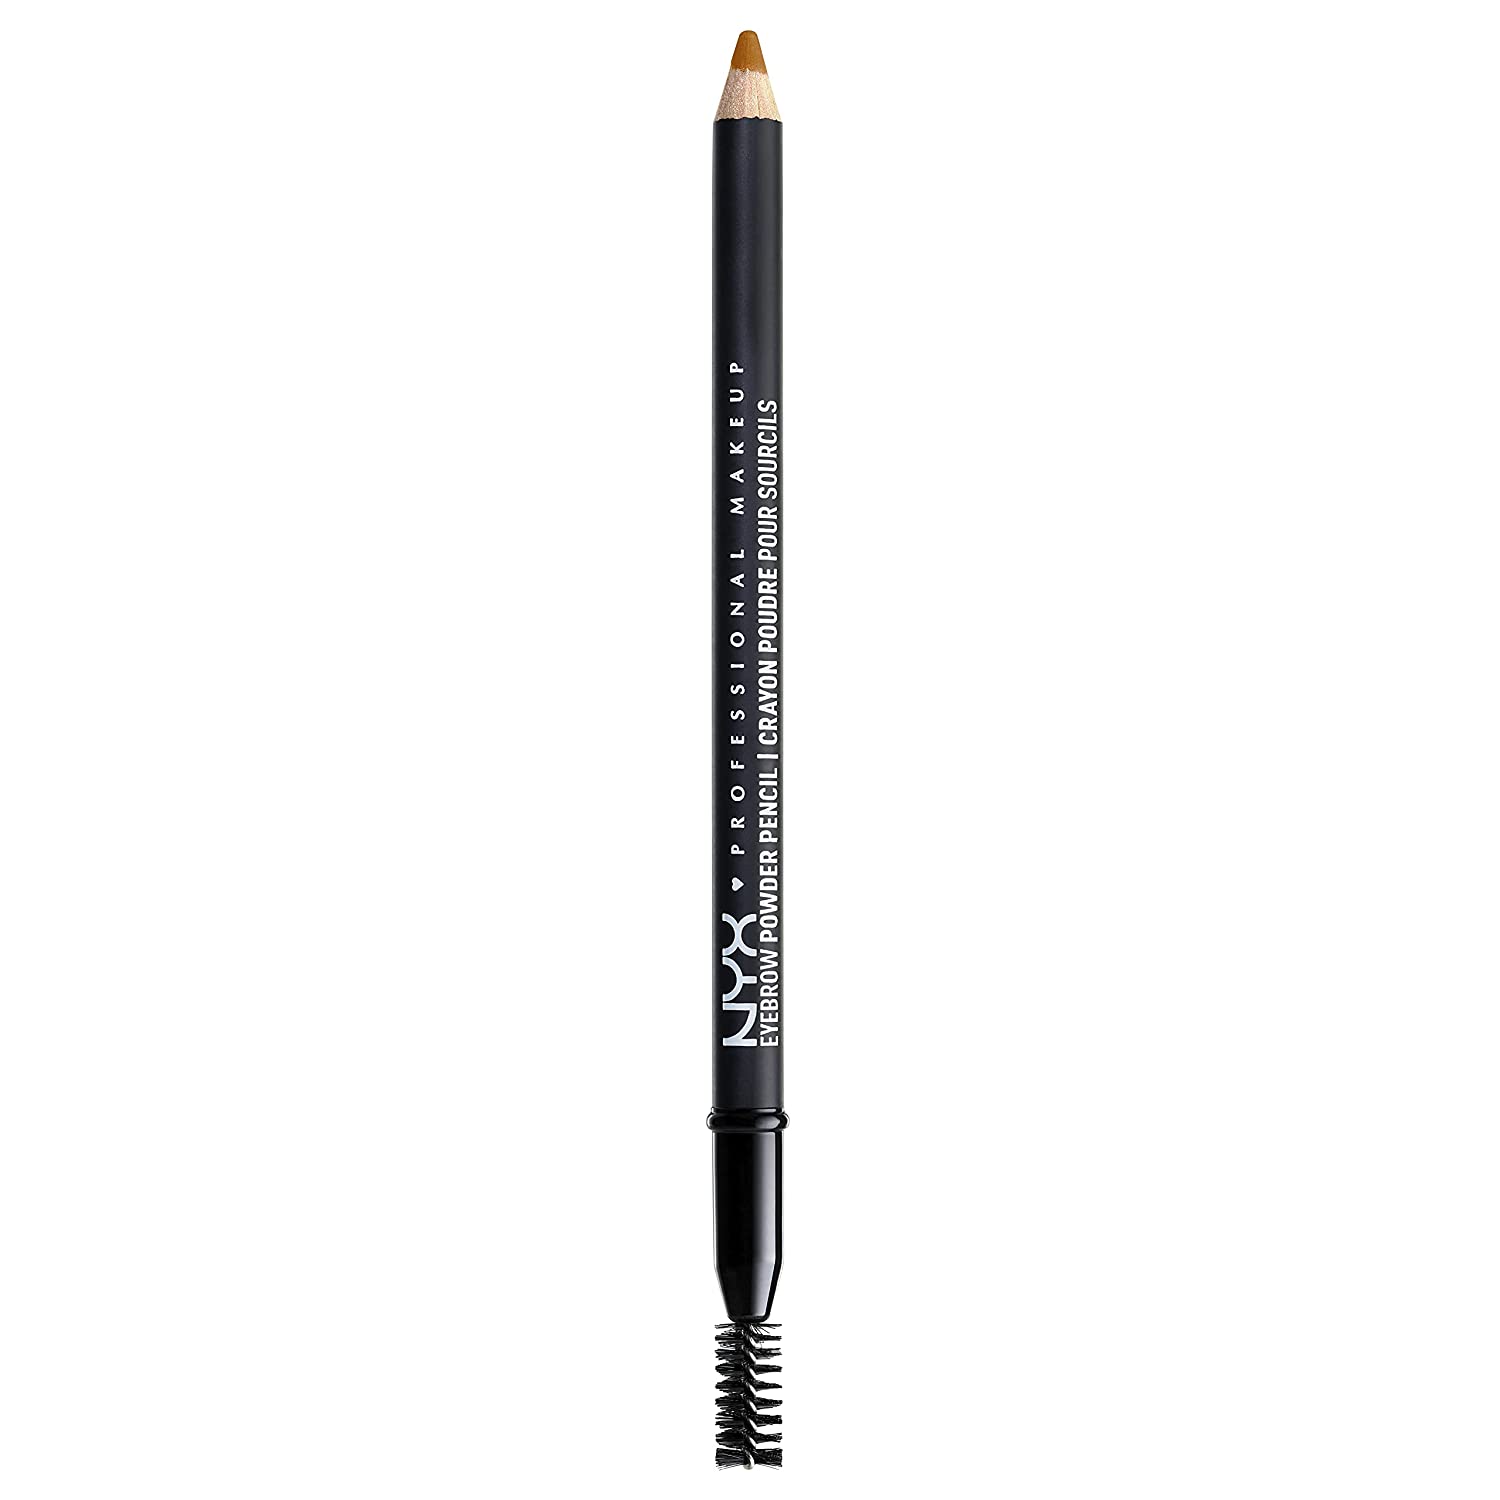 NYX Professional Makeup Eyebrow Powder Pencil (Auburn) $1.38 w/ S&S + Free Shipping w/ Prime or $25+